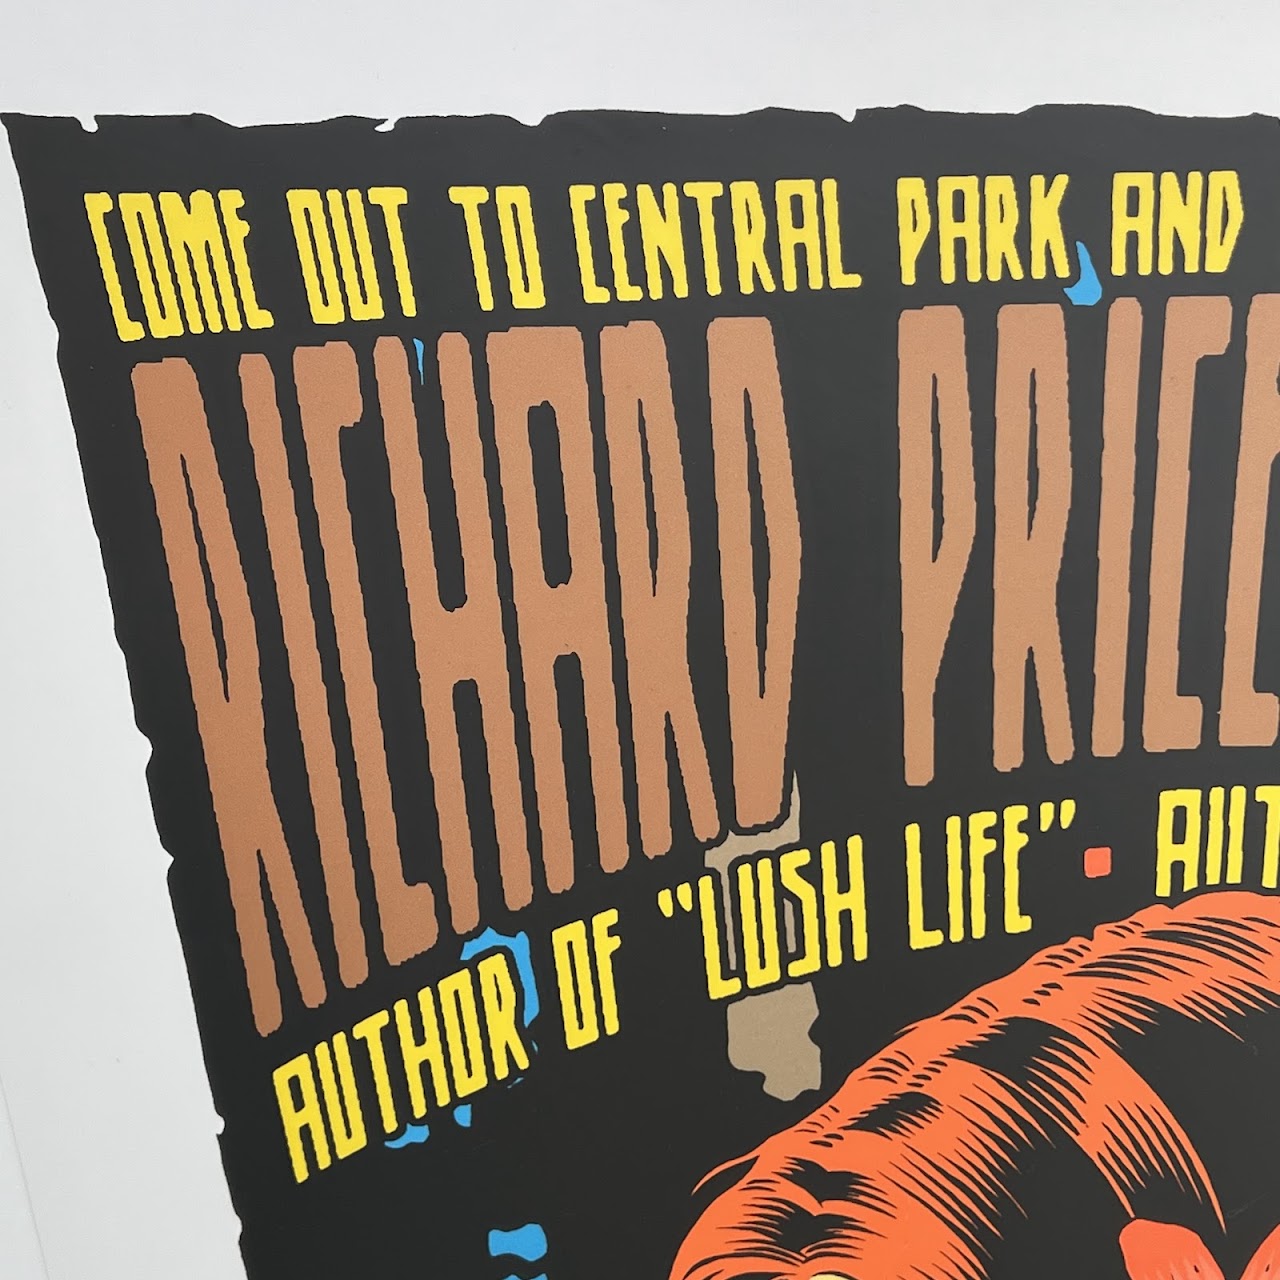 Chuck Sperry: Charles Bock & Richard Price Central Park SummerStage Silkscreen Poster